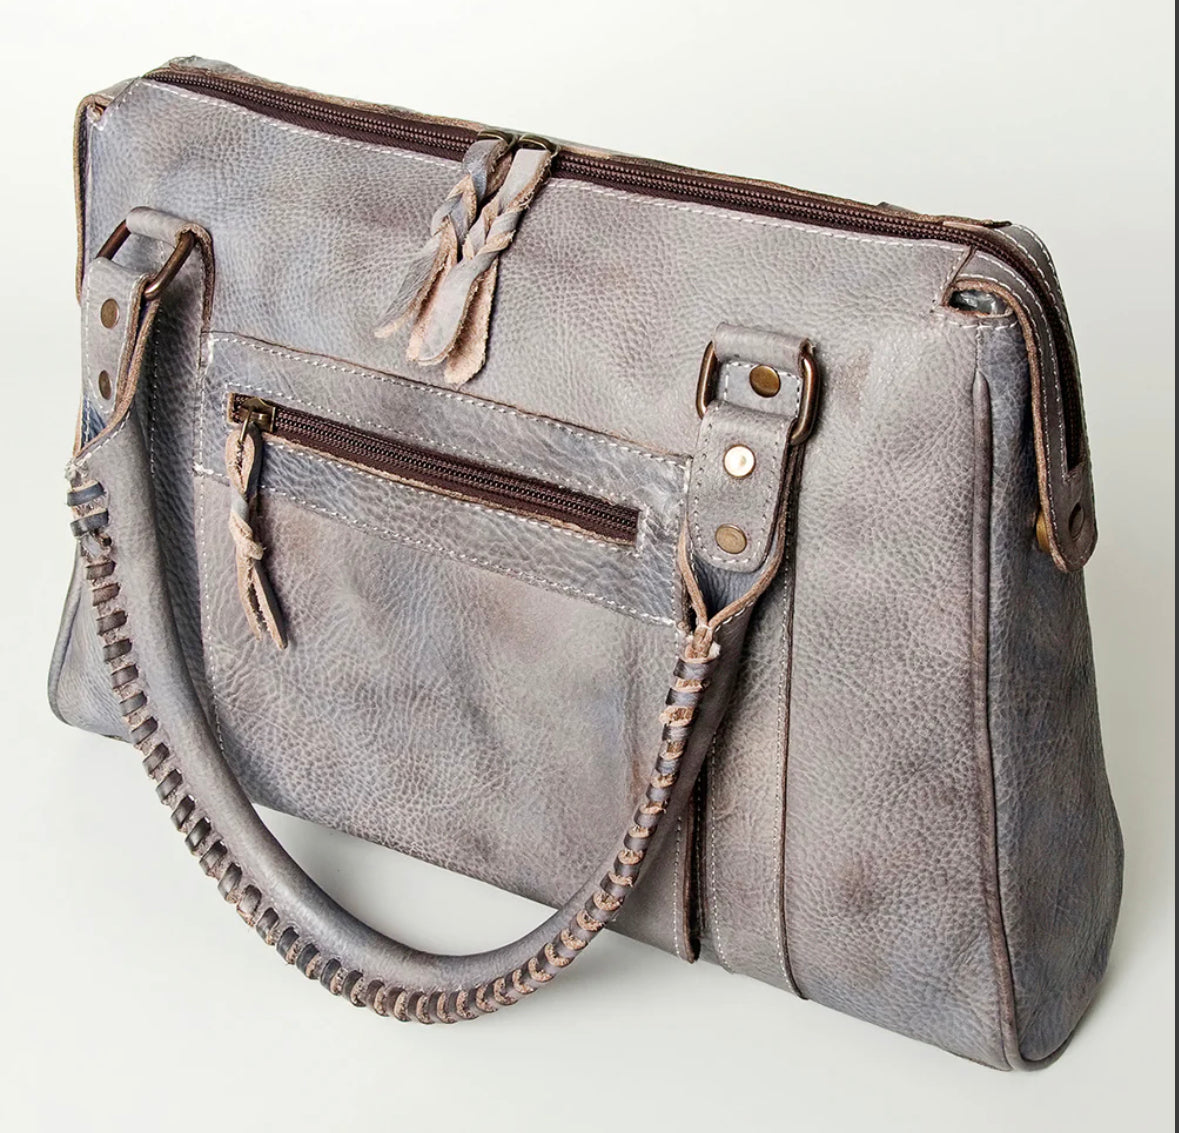 Leather tote purse